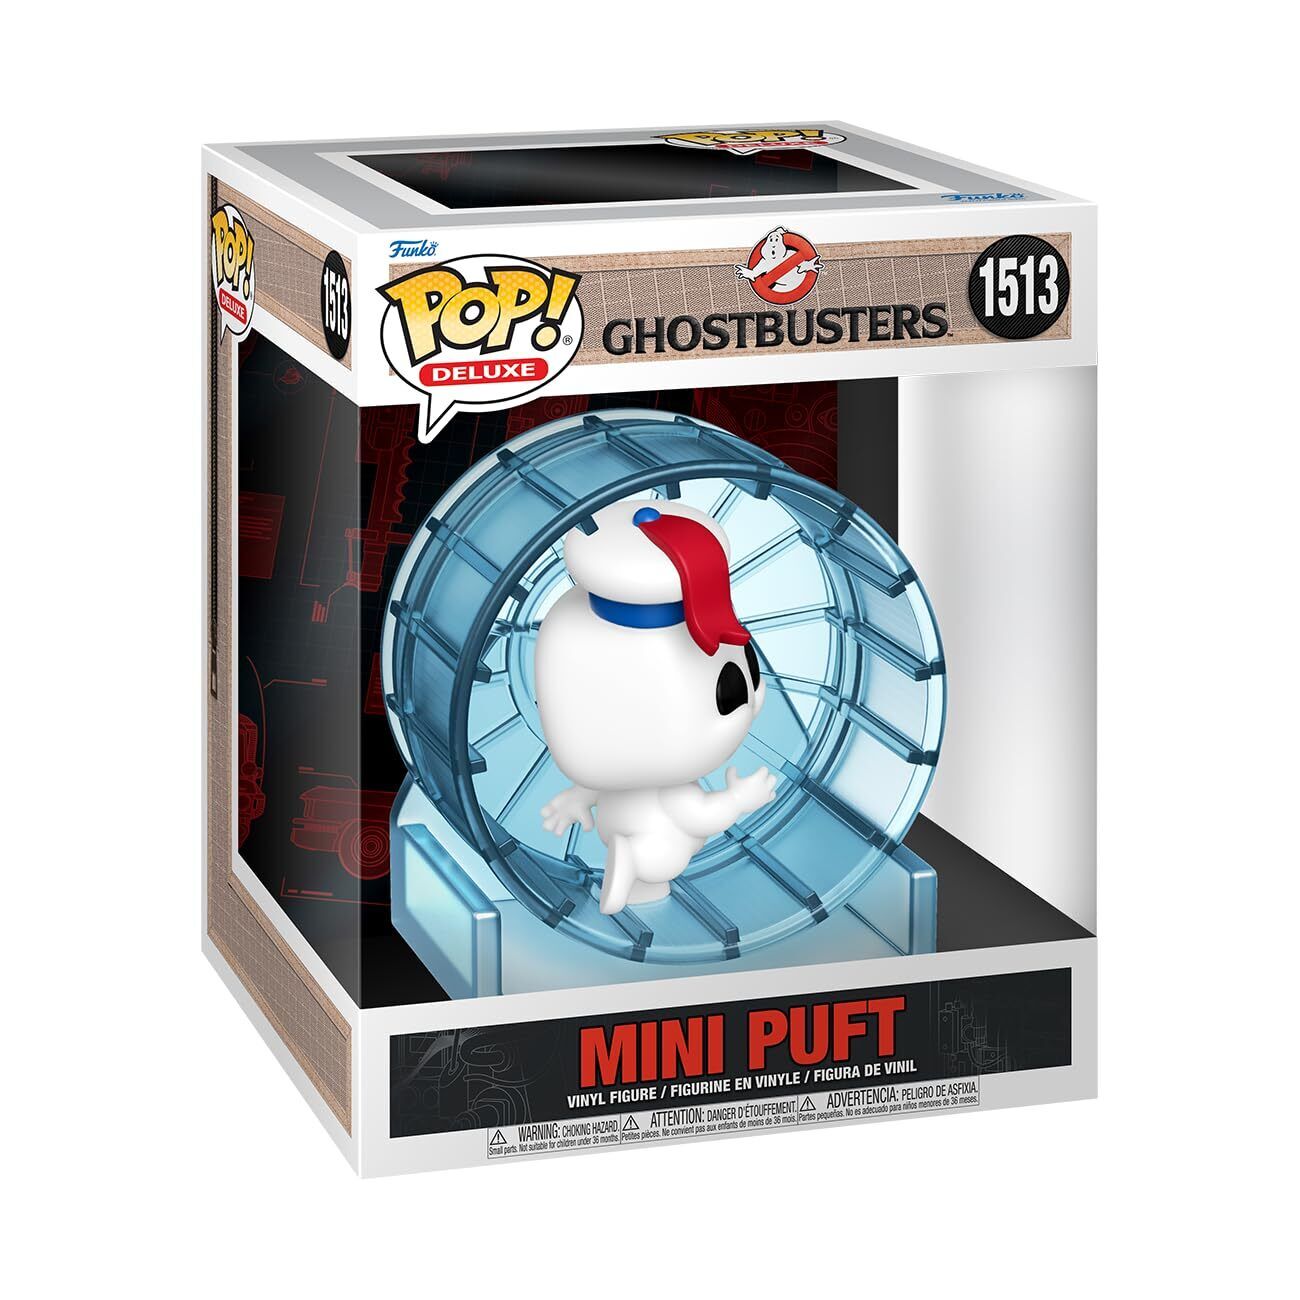 Ghostbusters Mini Puft in Wheel Funko Pop Deluxe + PROTECTIVE CASE